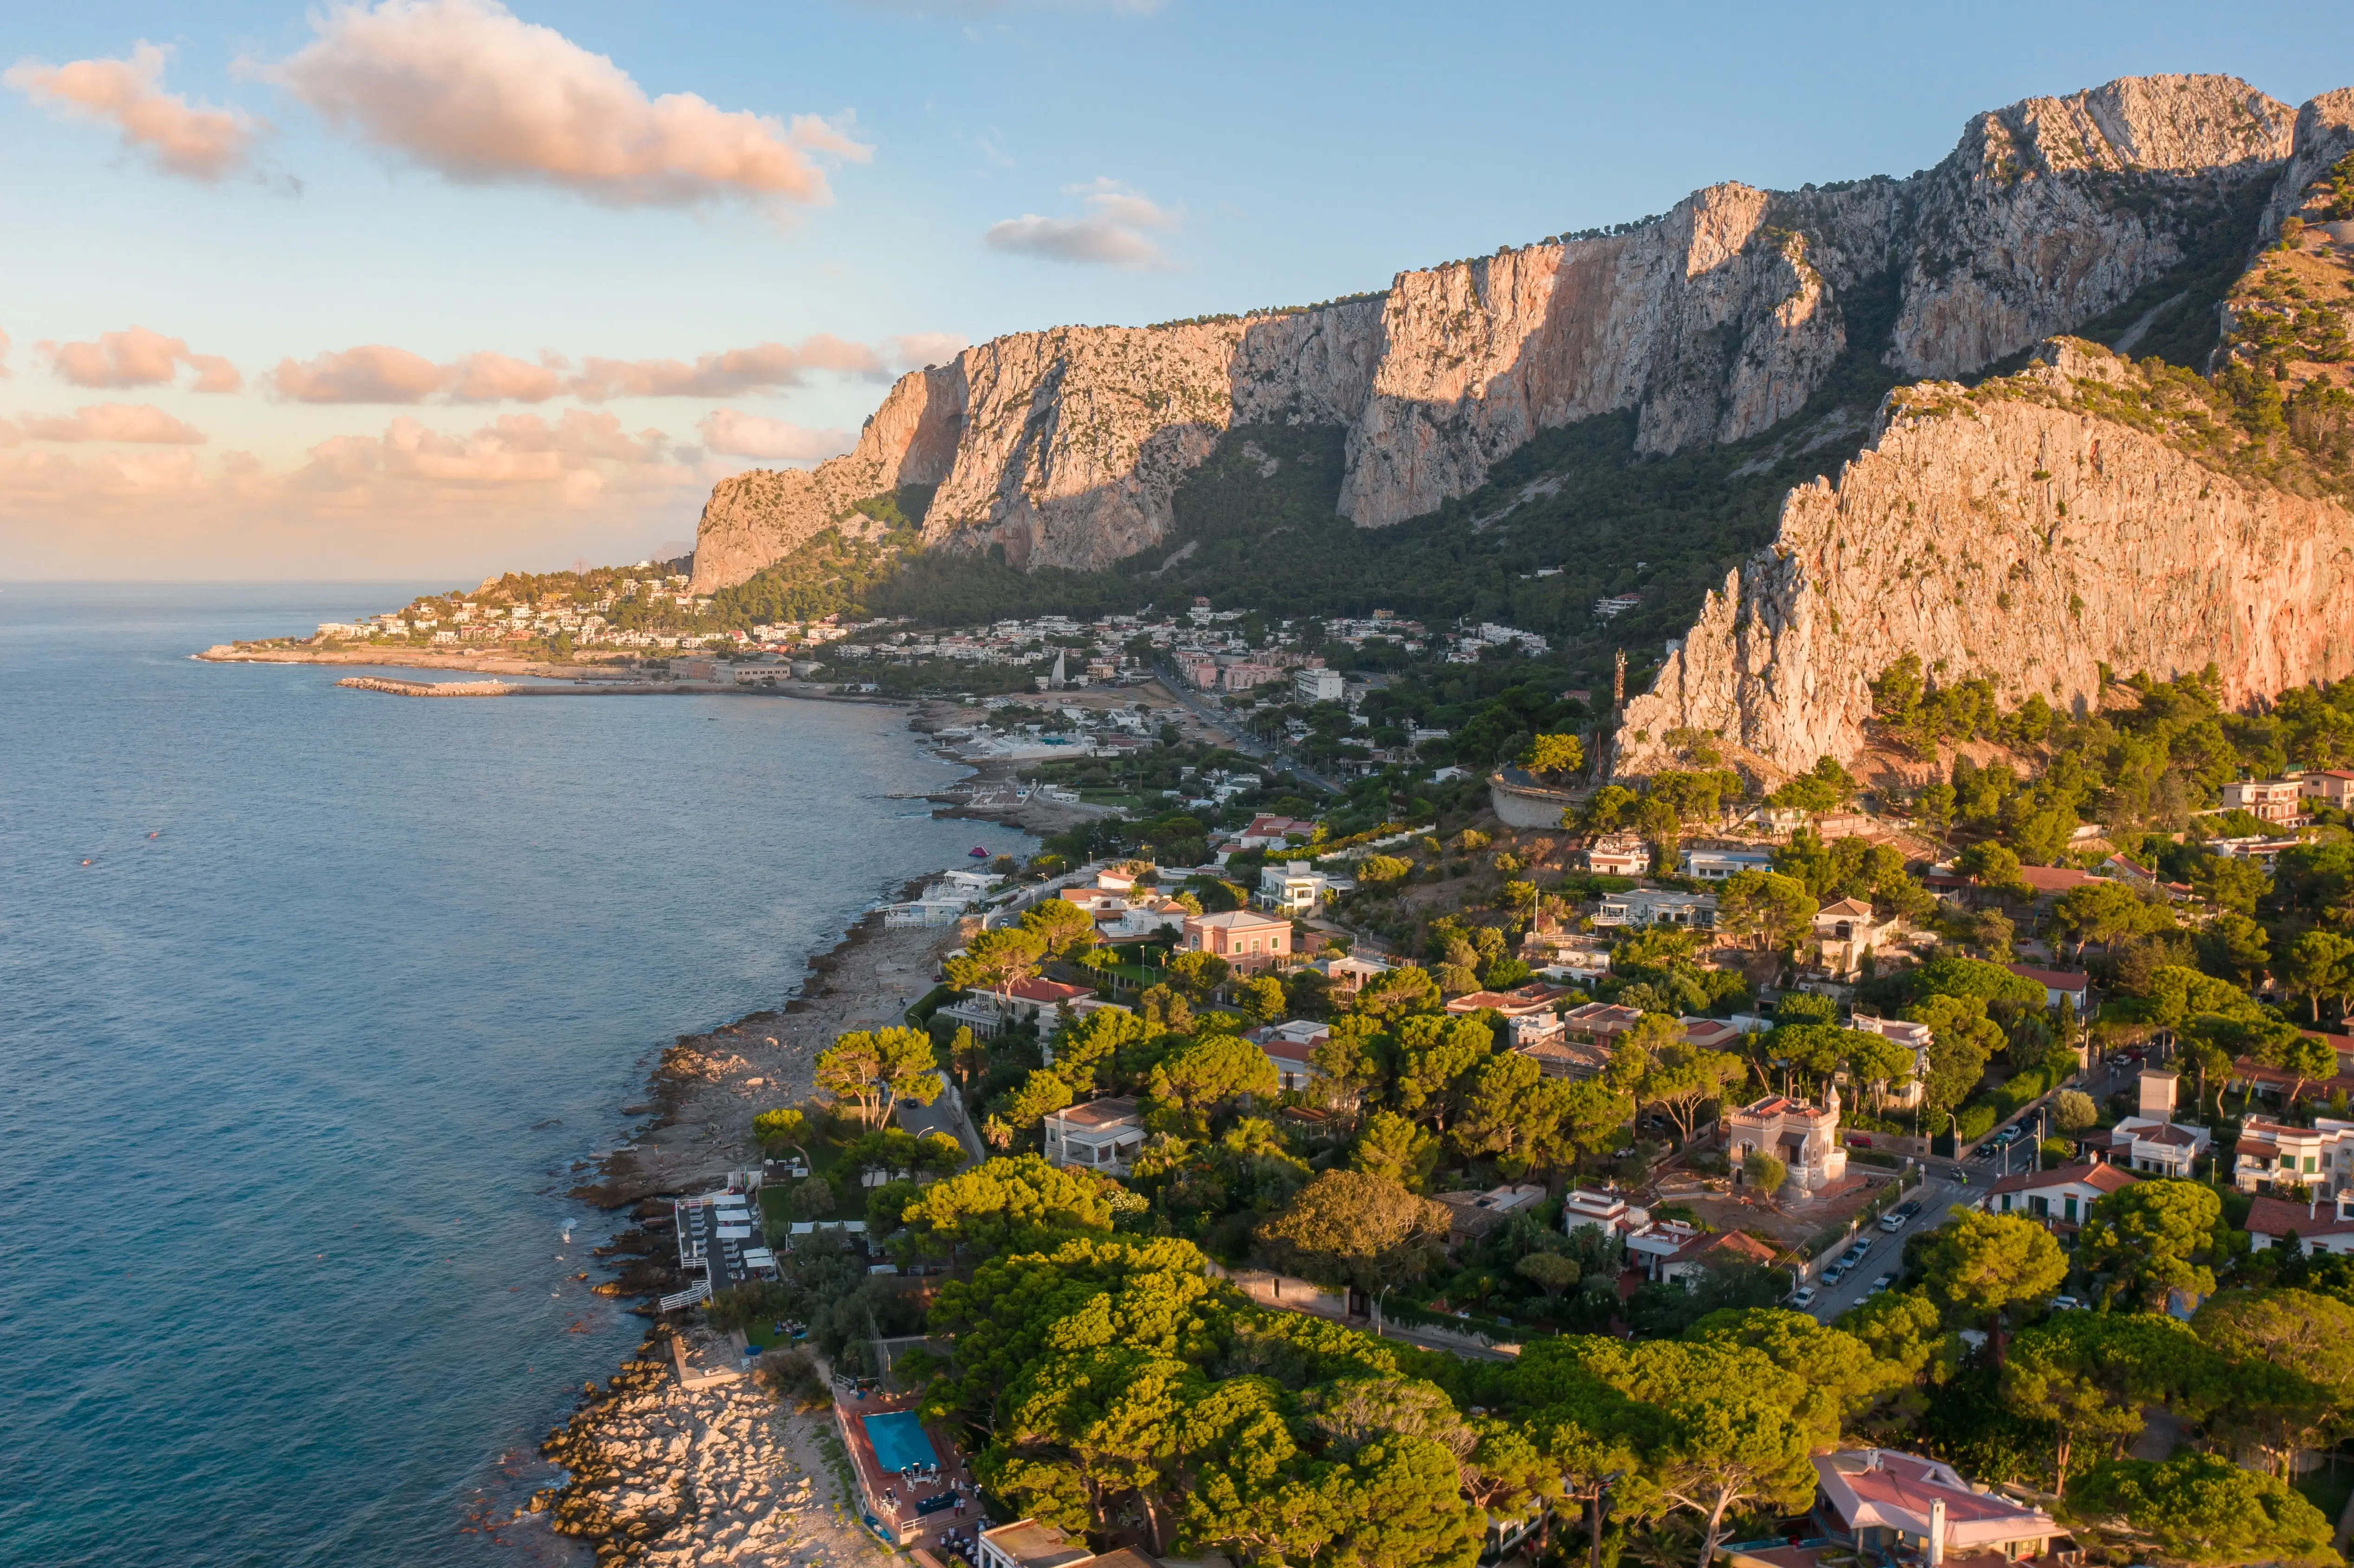 Palermo hotel guide image shows Sicilian coastline